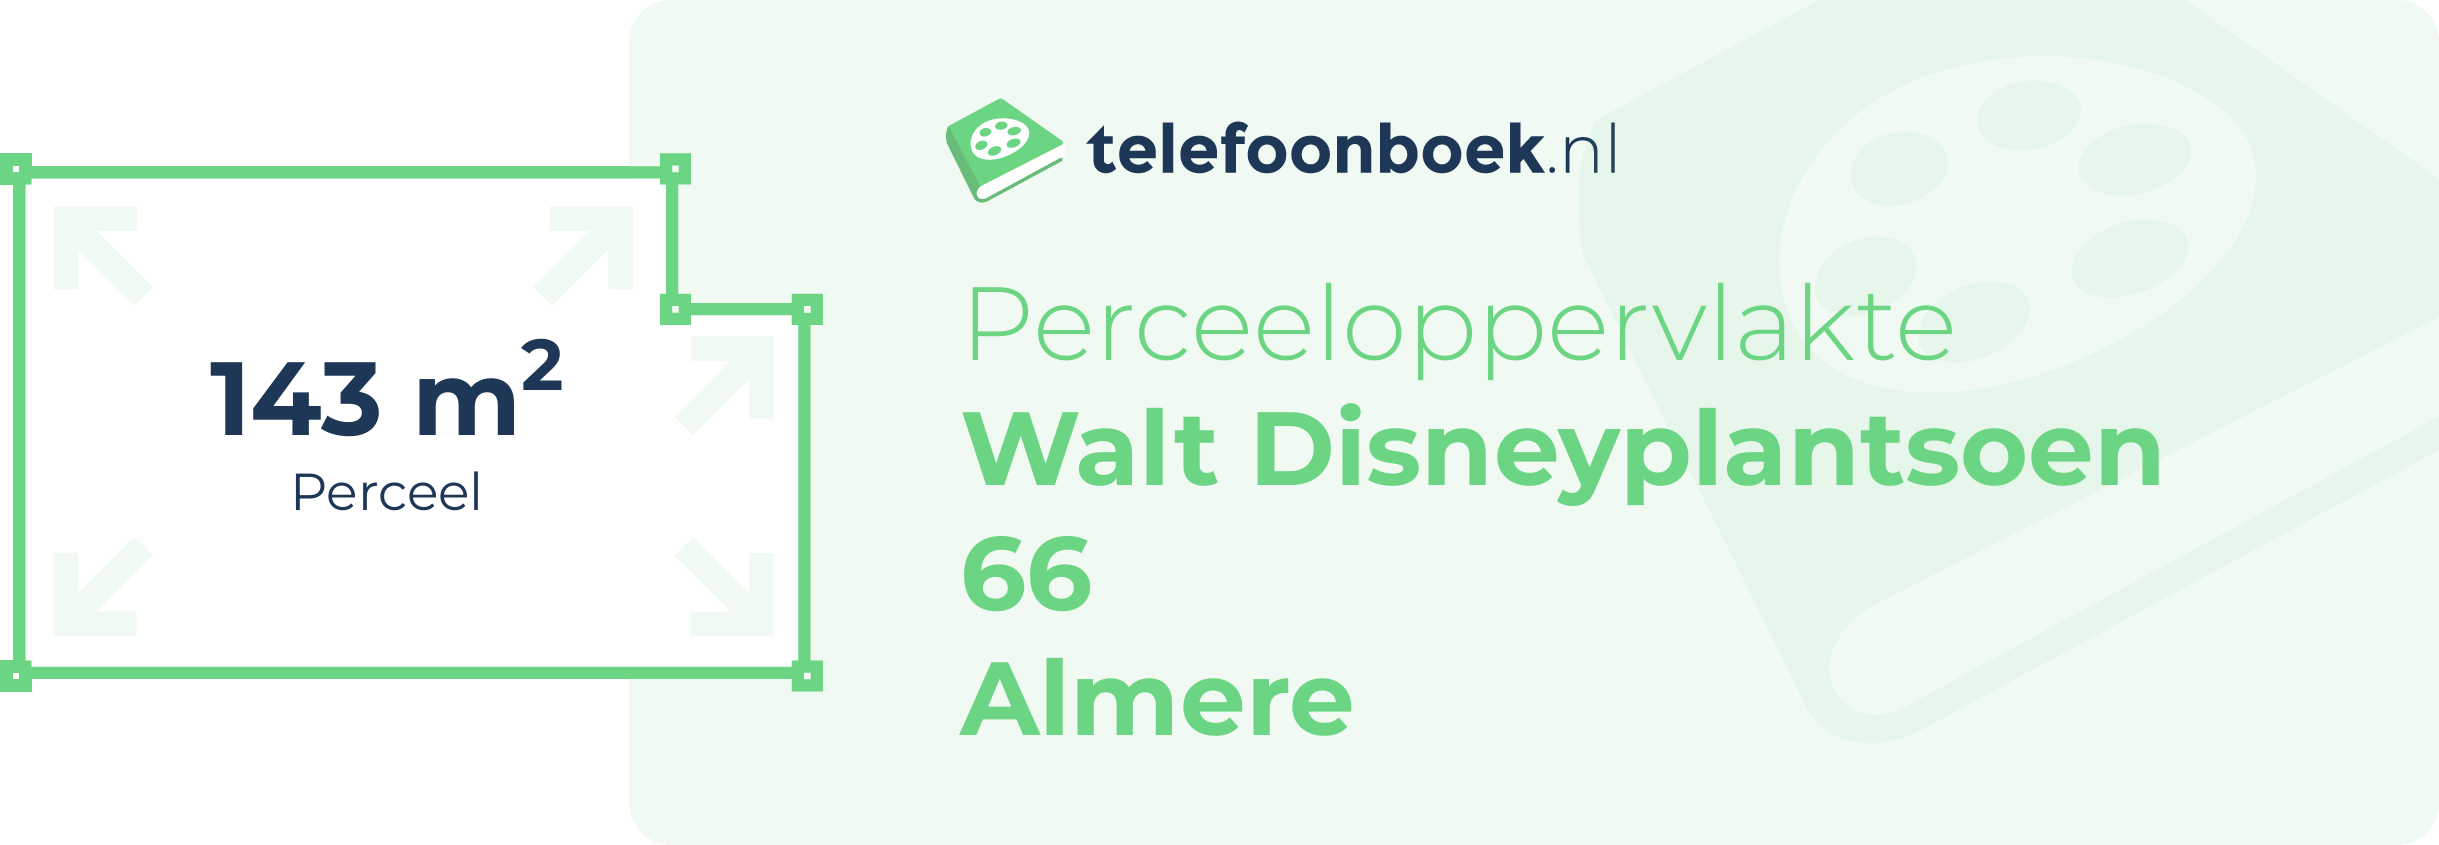 Perceeloppervlakte Walt Disneyplantsoen 66 Almere